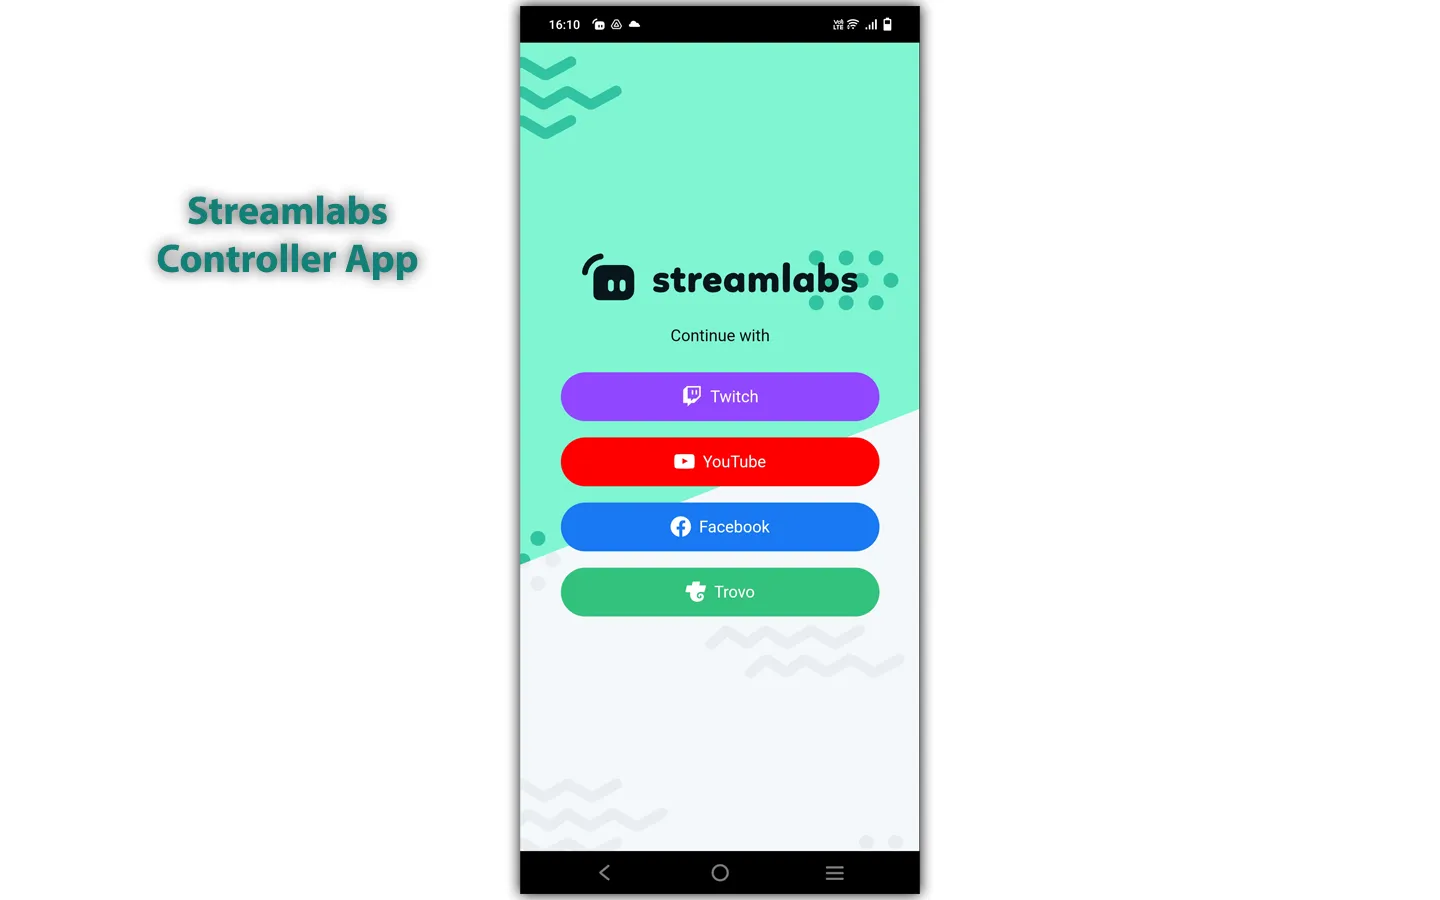 Streamlabs Controller App